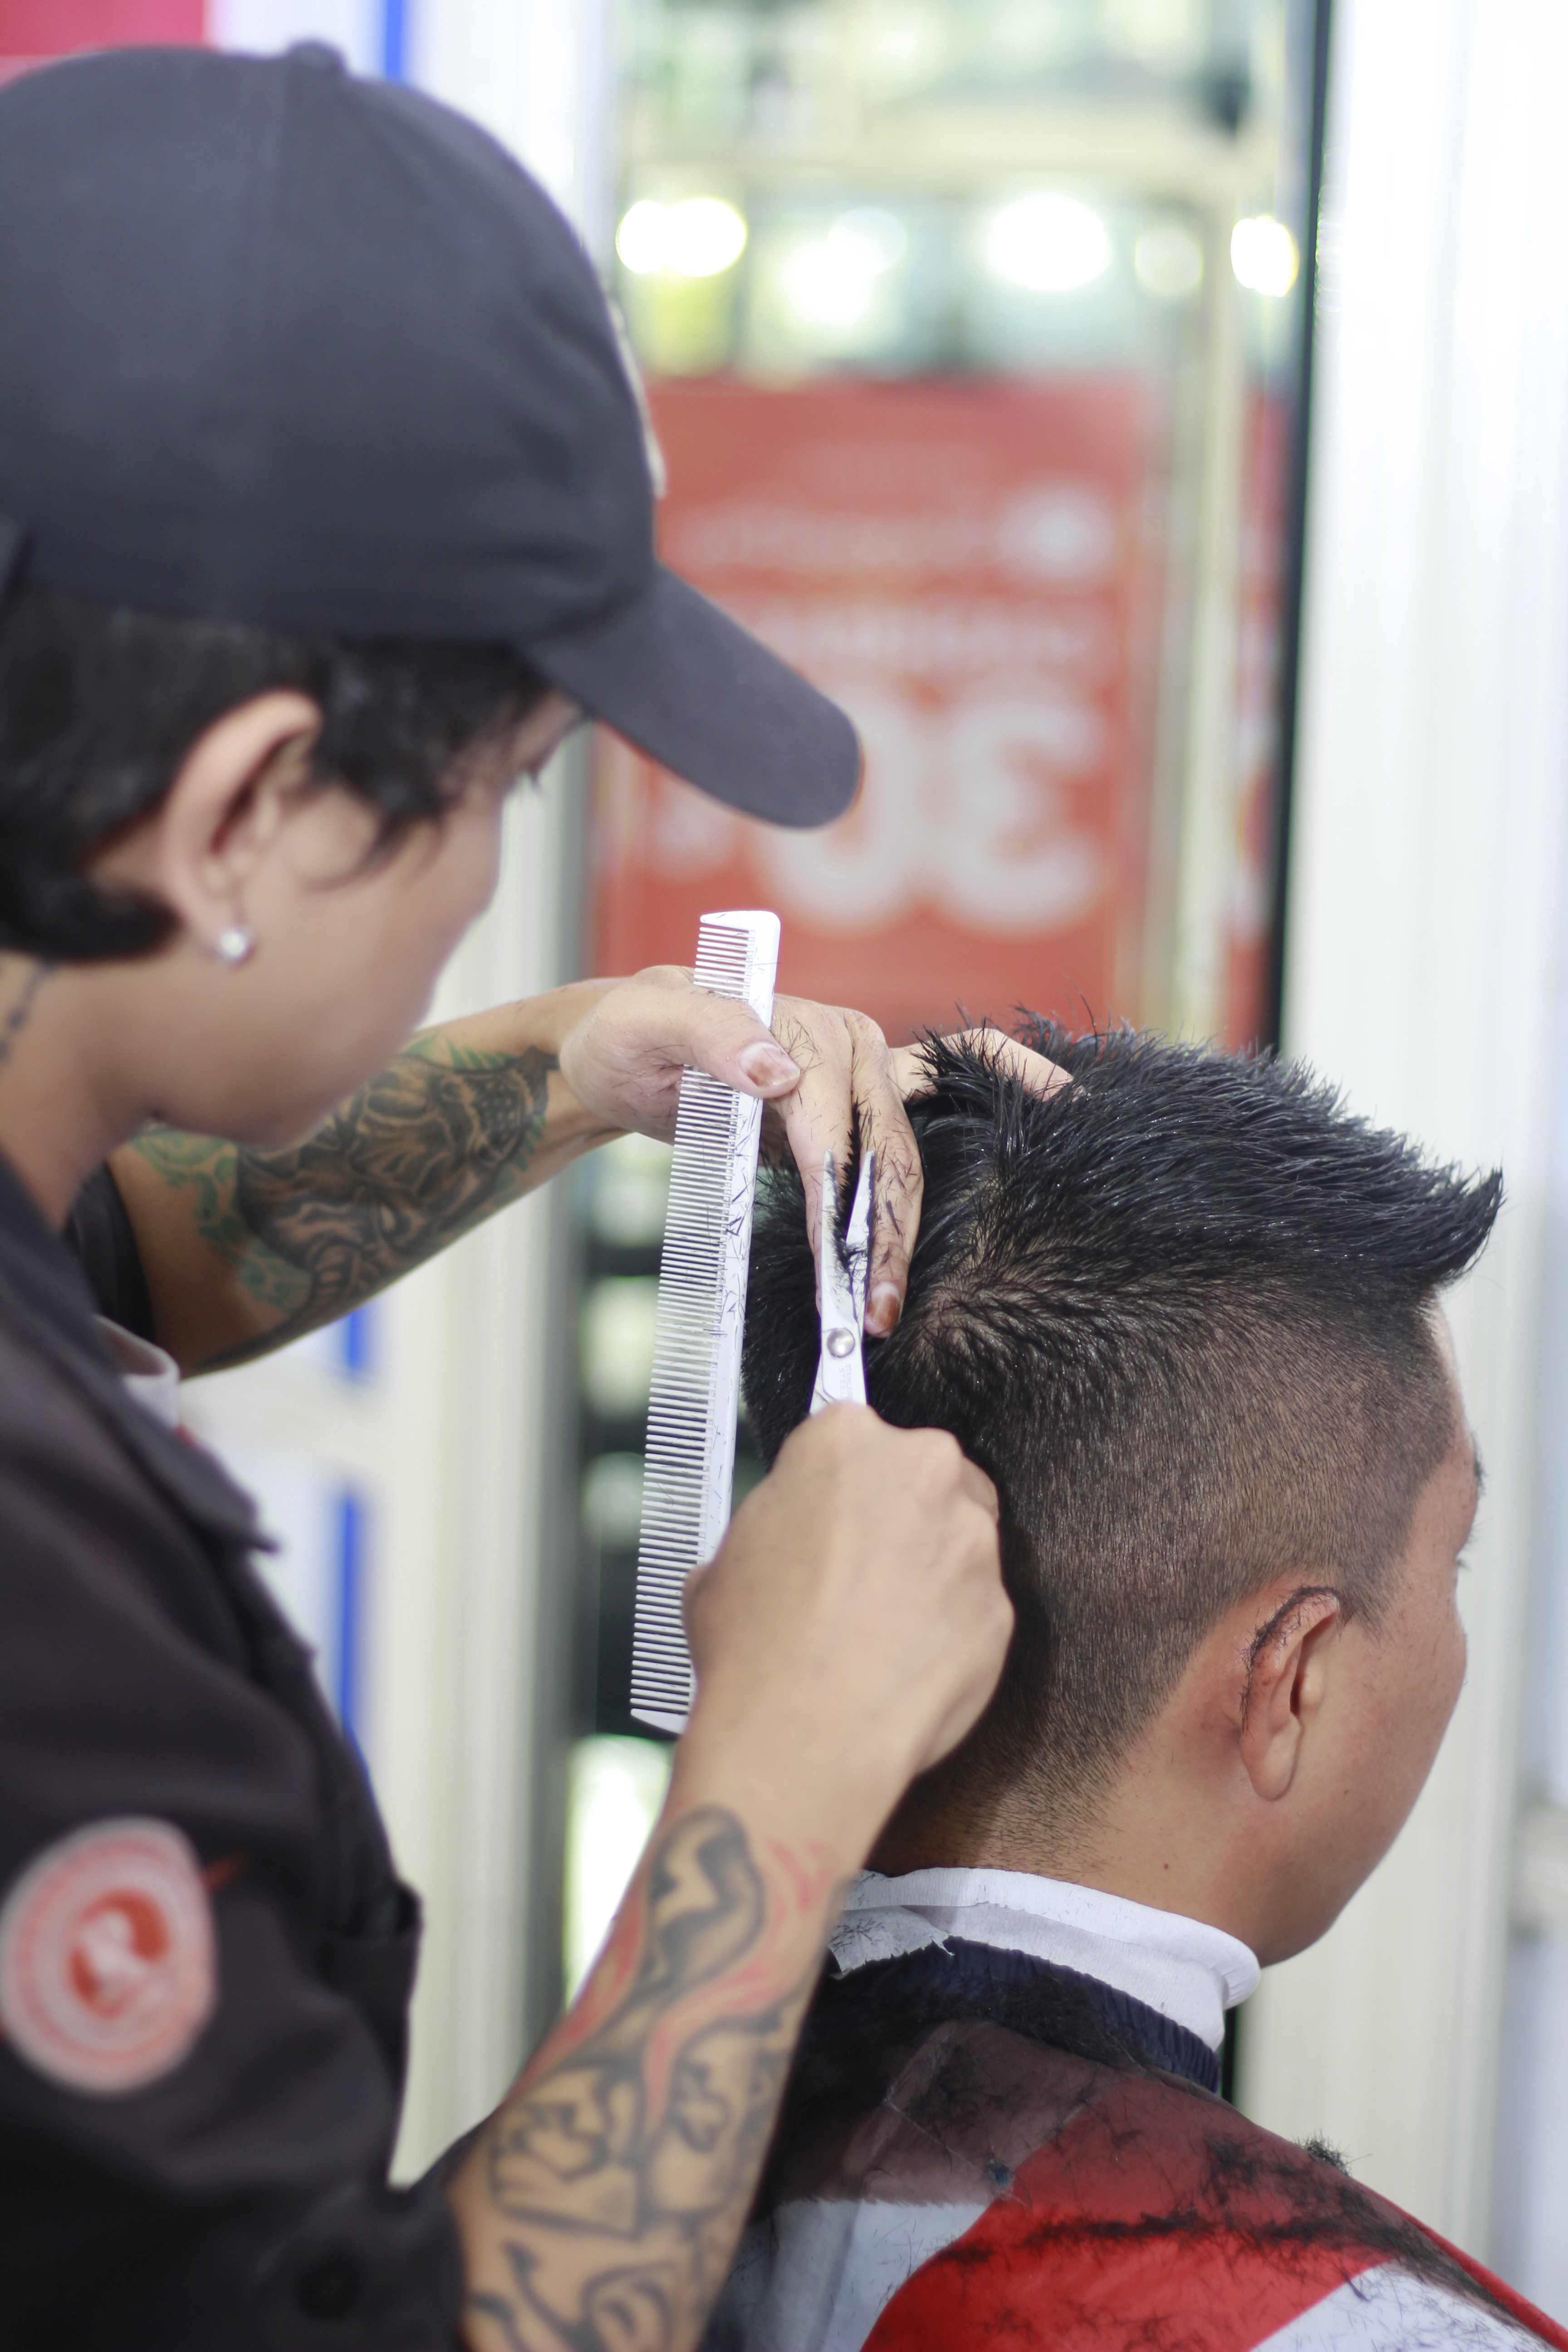 Tempat Cukur Rambut Di Kota Malang Keren